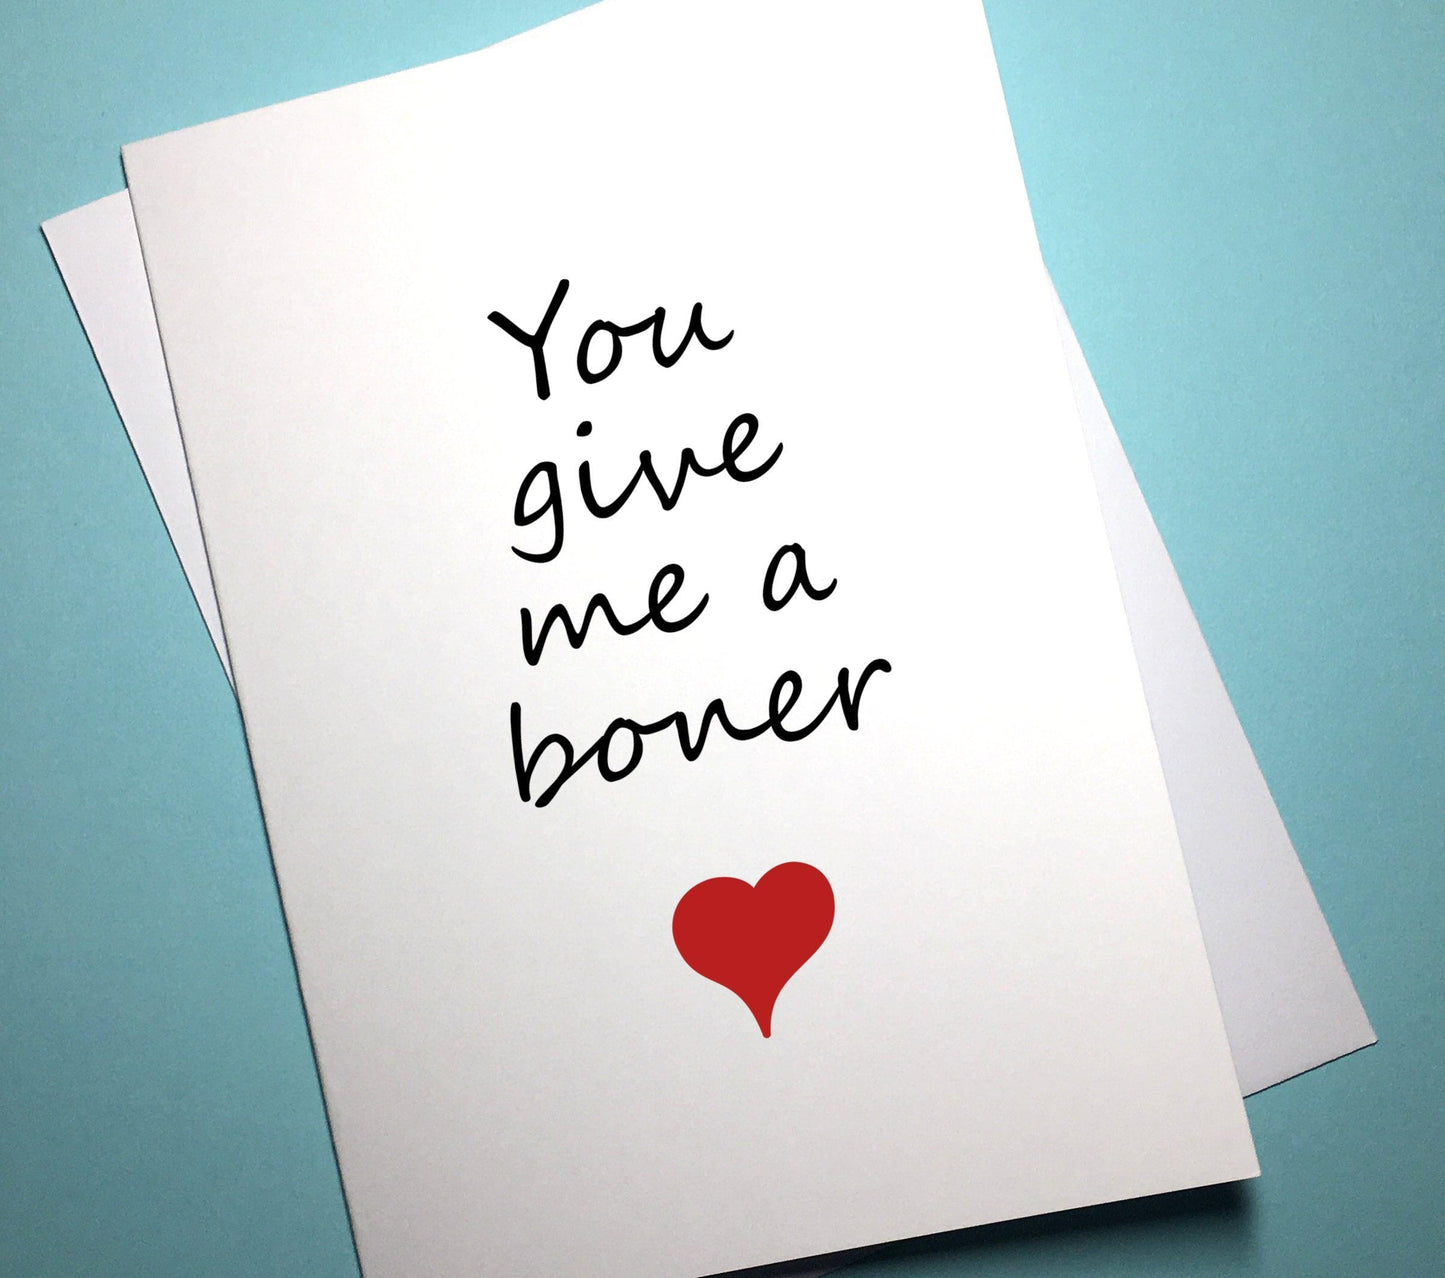 Valentine's Anniversary Card - Boner - Mr. Inappropriate 